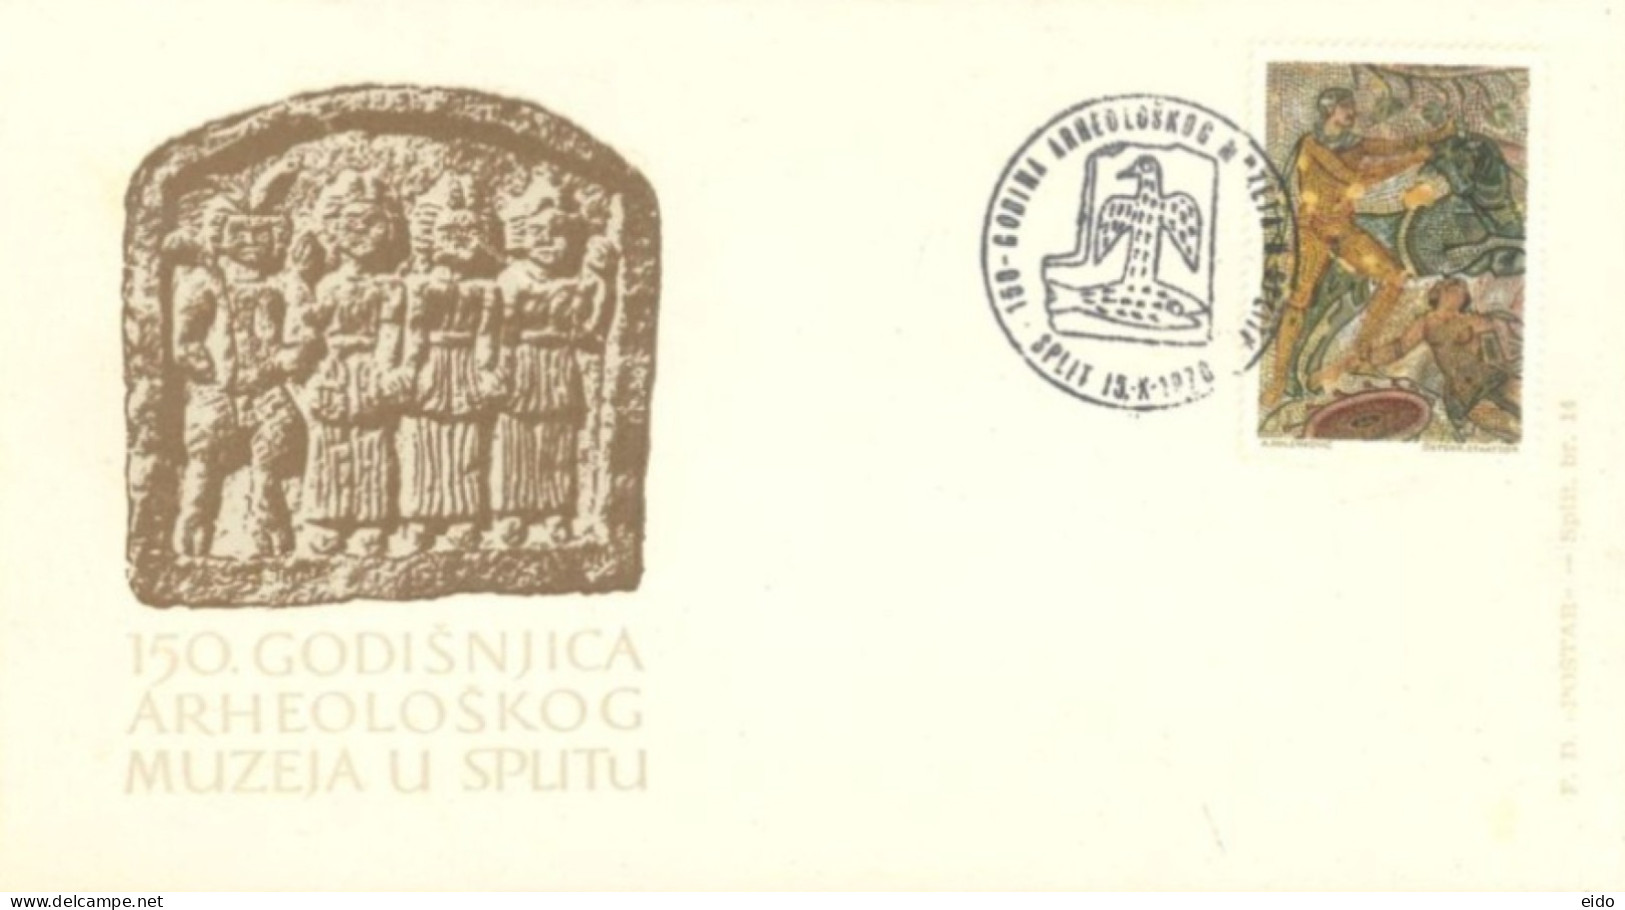 YUGOSLAVIA  - 1970, FDC STAMP OF150 GODINKA  ARCHAEOLOGICAL MUSEUM OF SPLIT WITH DESCRIPTION LEAFLET. - Cartas & Documentos